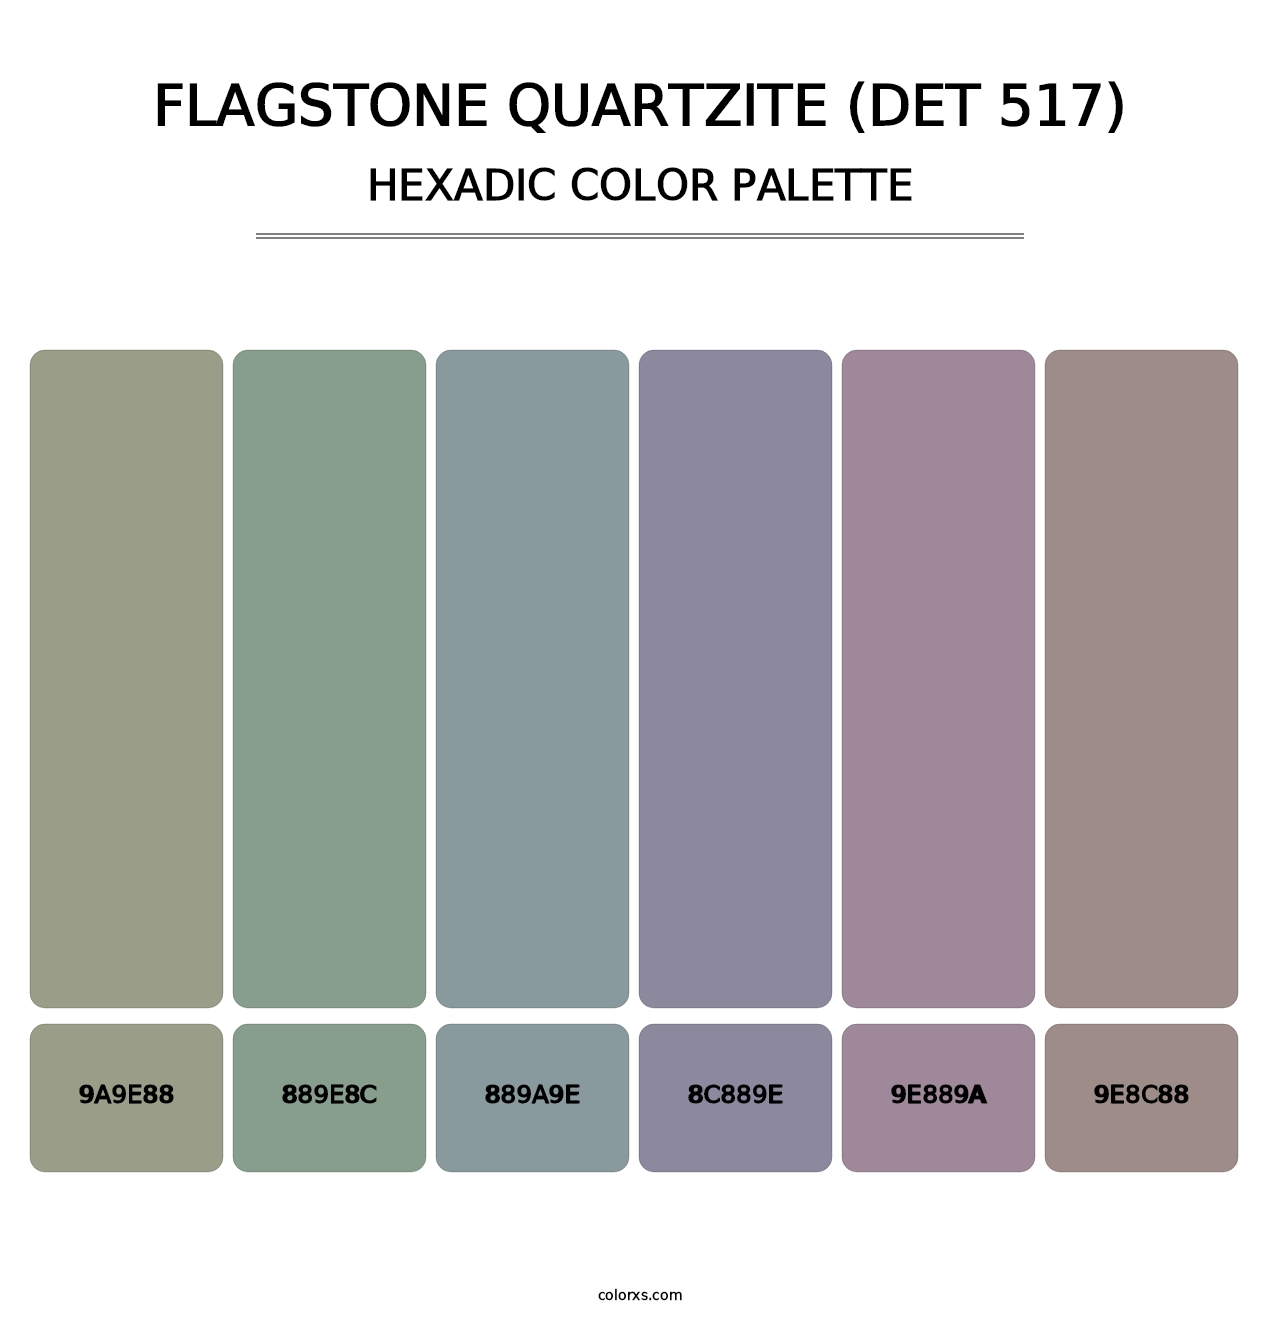 Flagstone Quartzite (DET 517) - Hexadic Color Palette